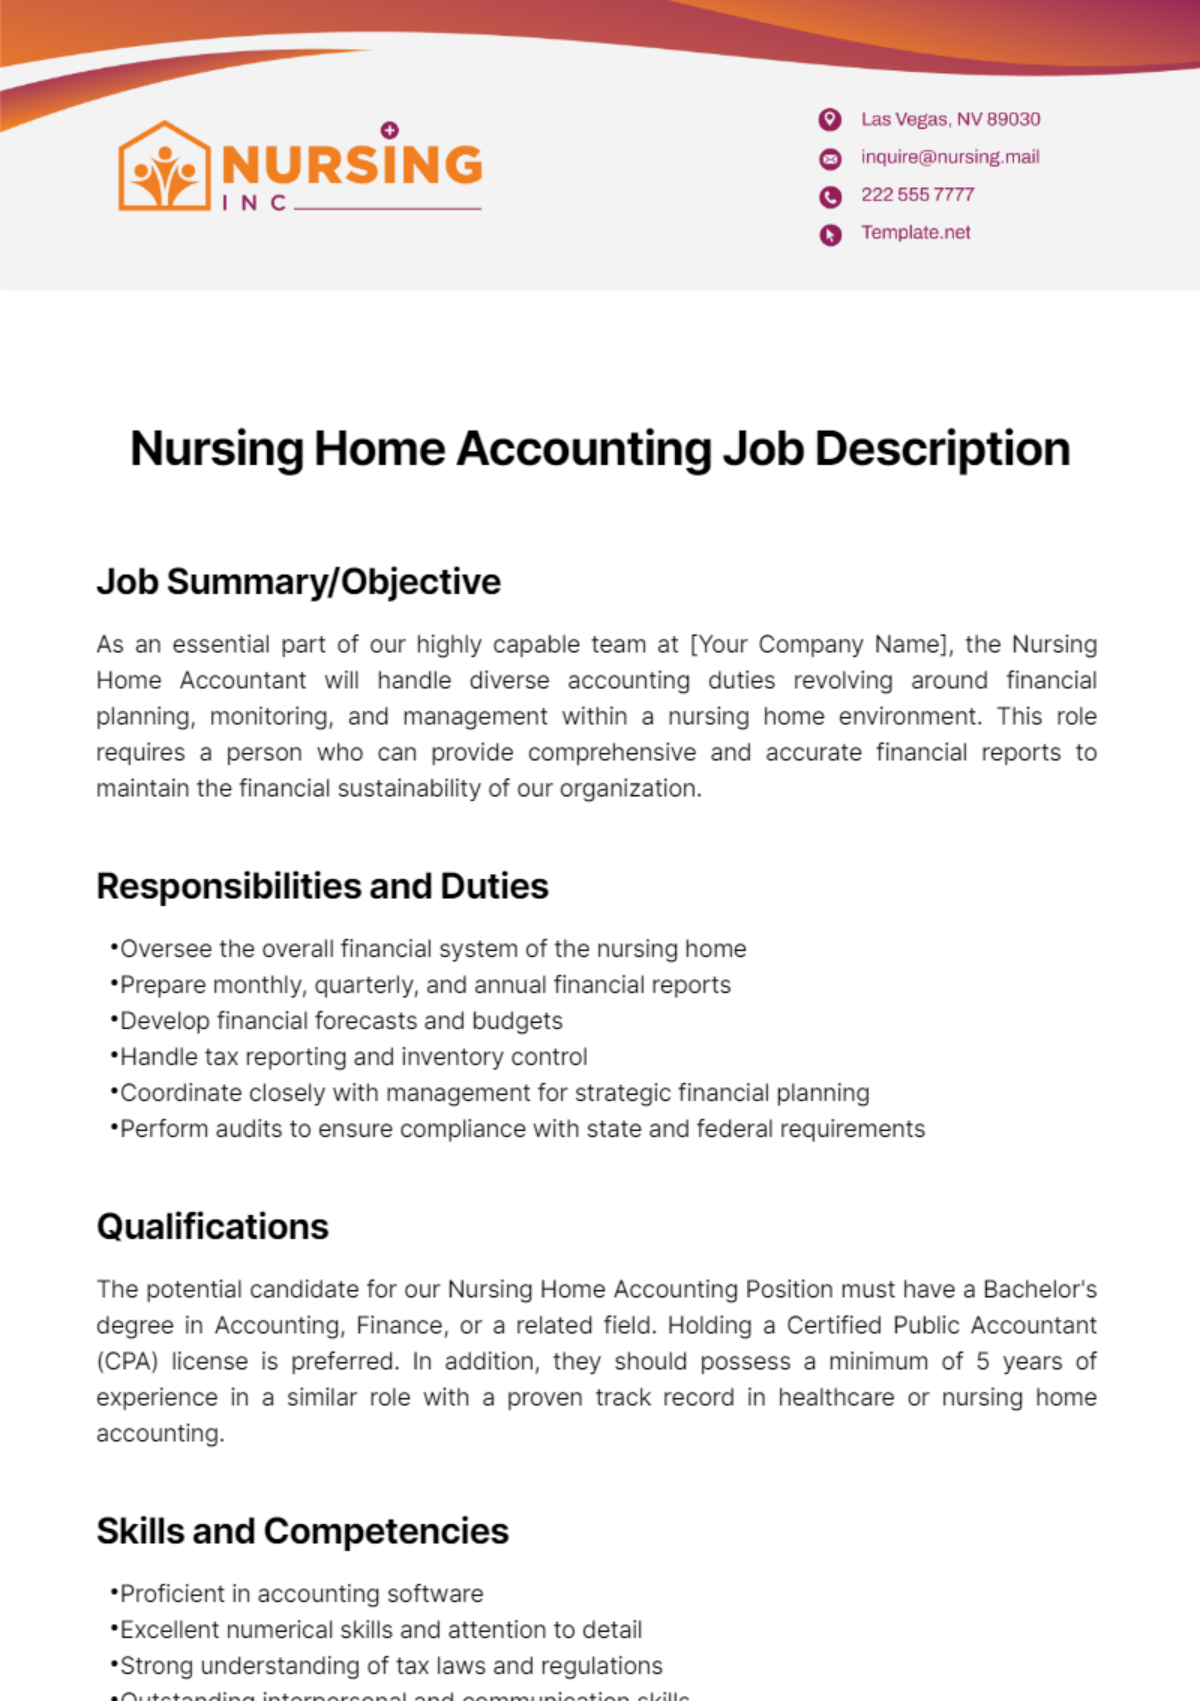 Nursing Home Accounting Job Description Template